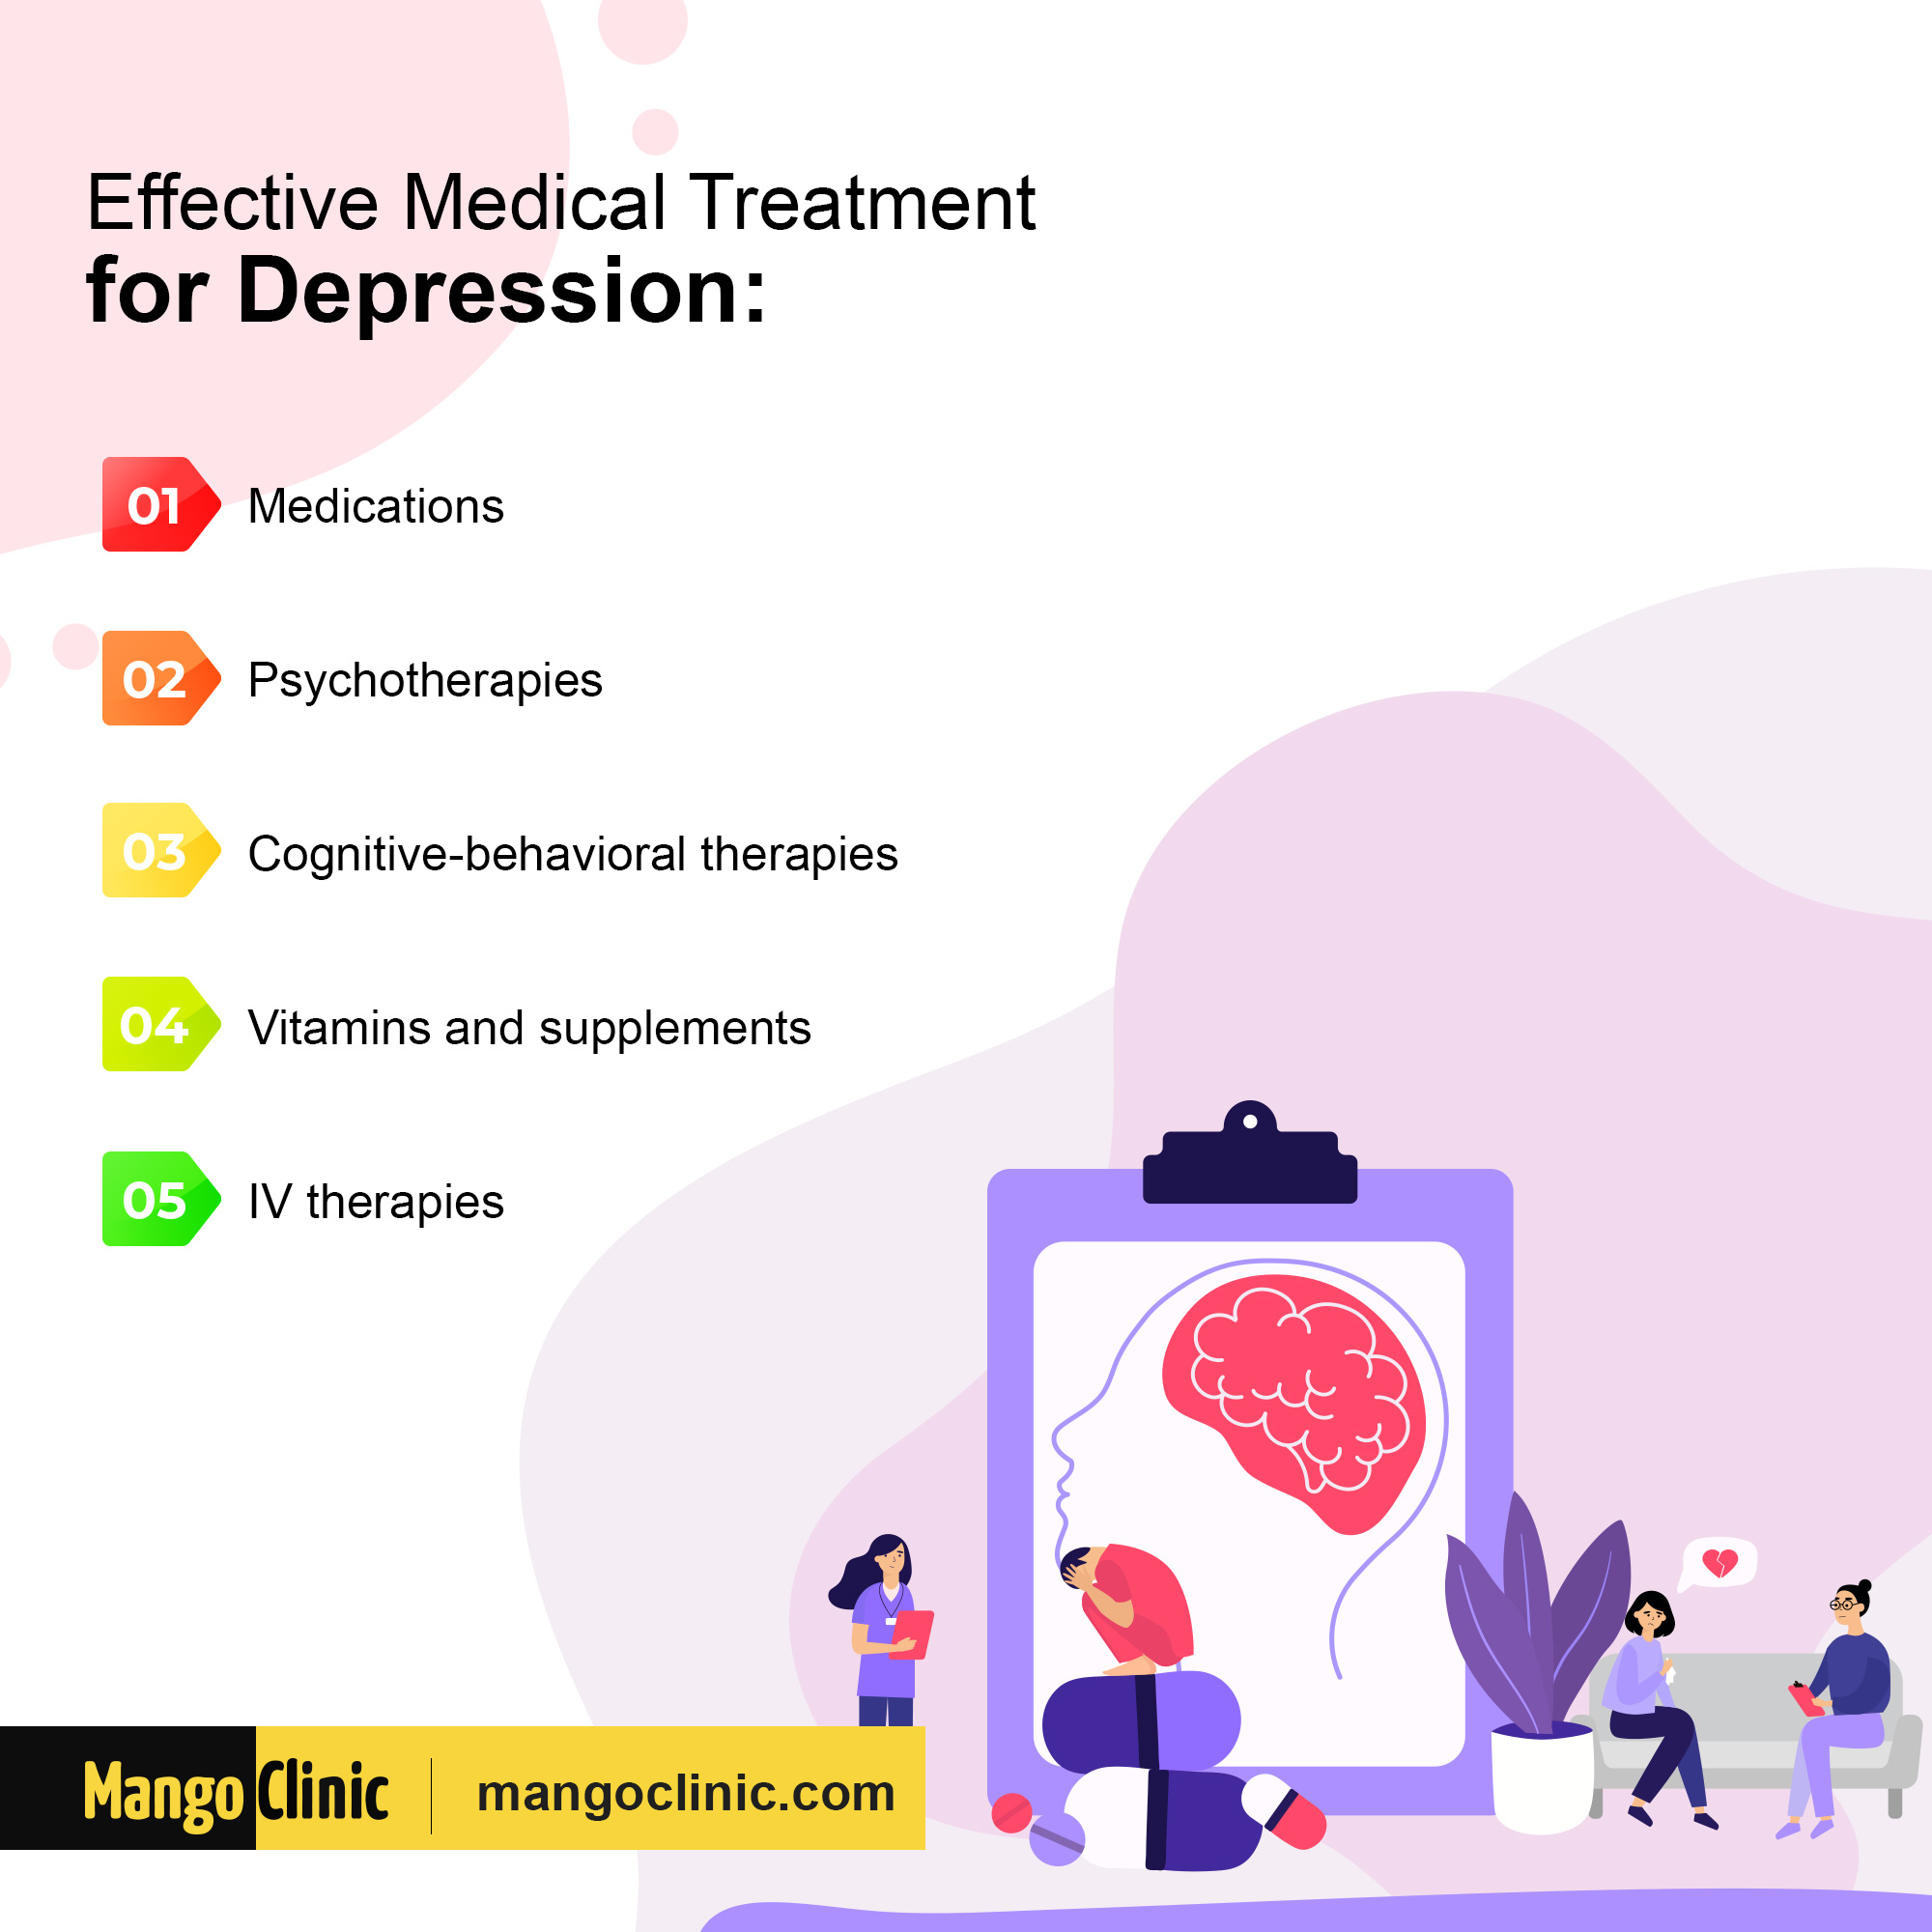 Medical treatment for depression